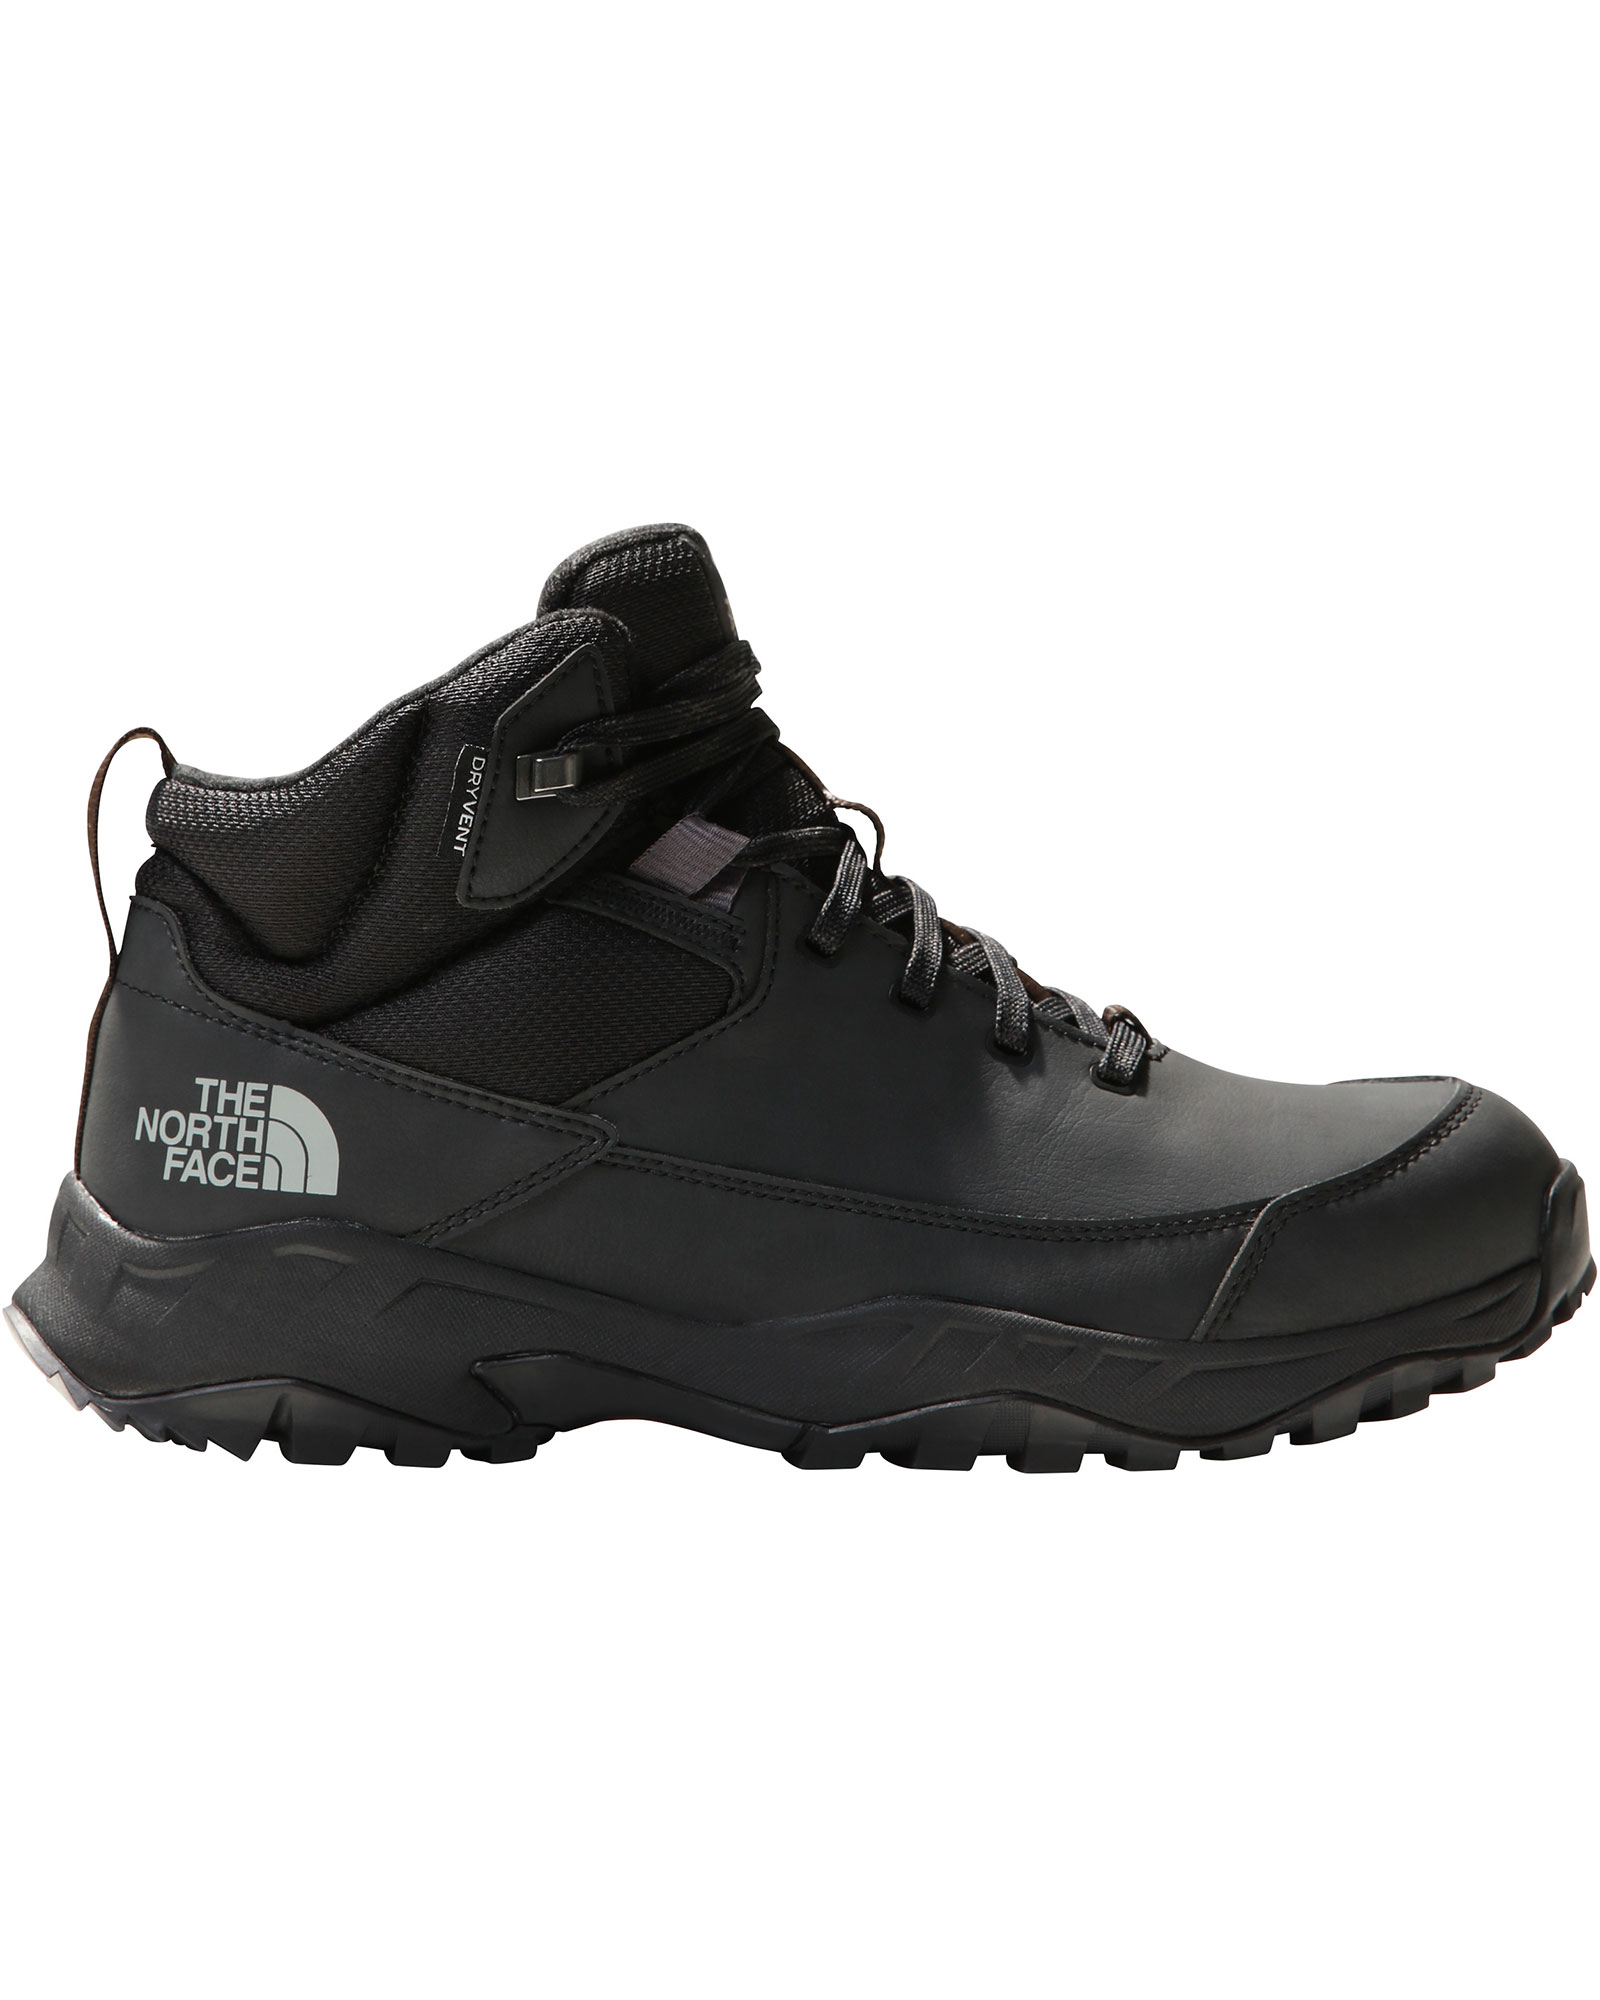 The North Face Storm Strike III Waterproof Men’s Boots - TNF Black/Asphalt Grey UK 11